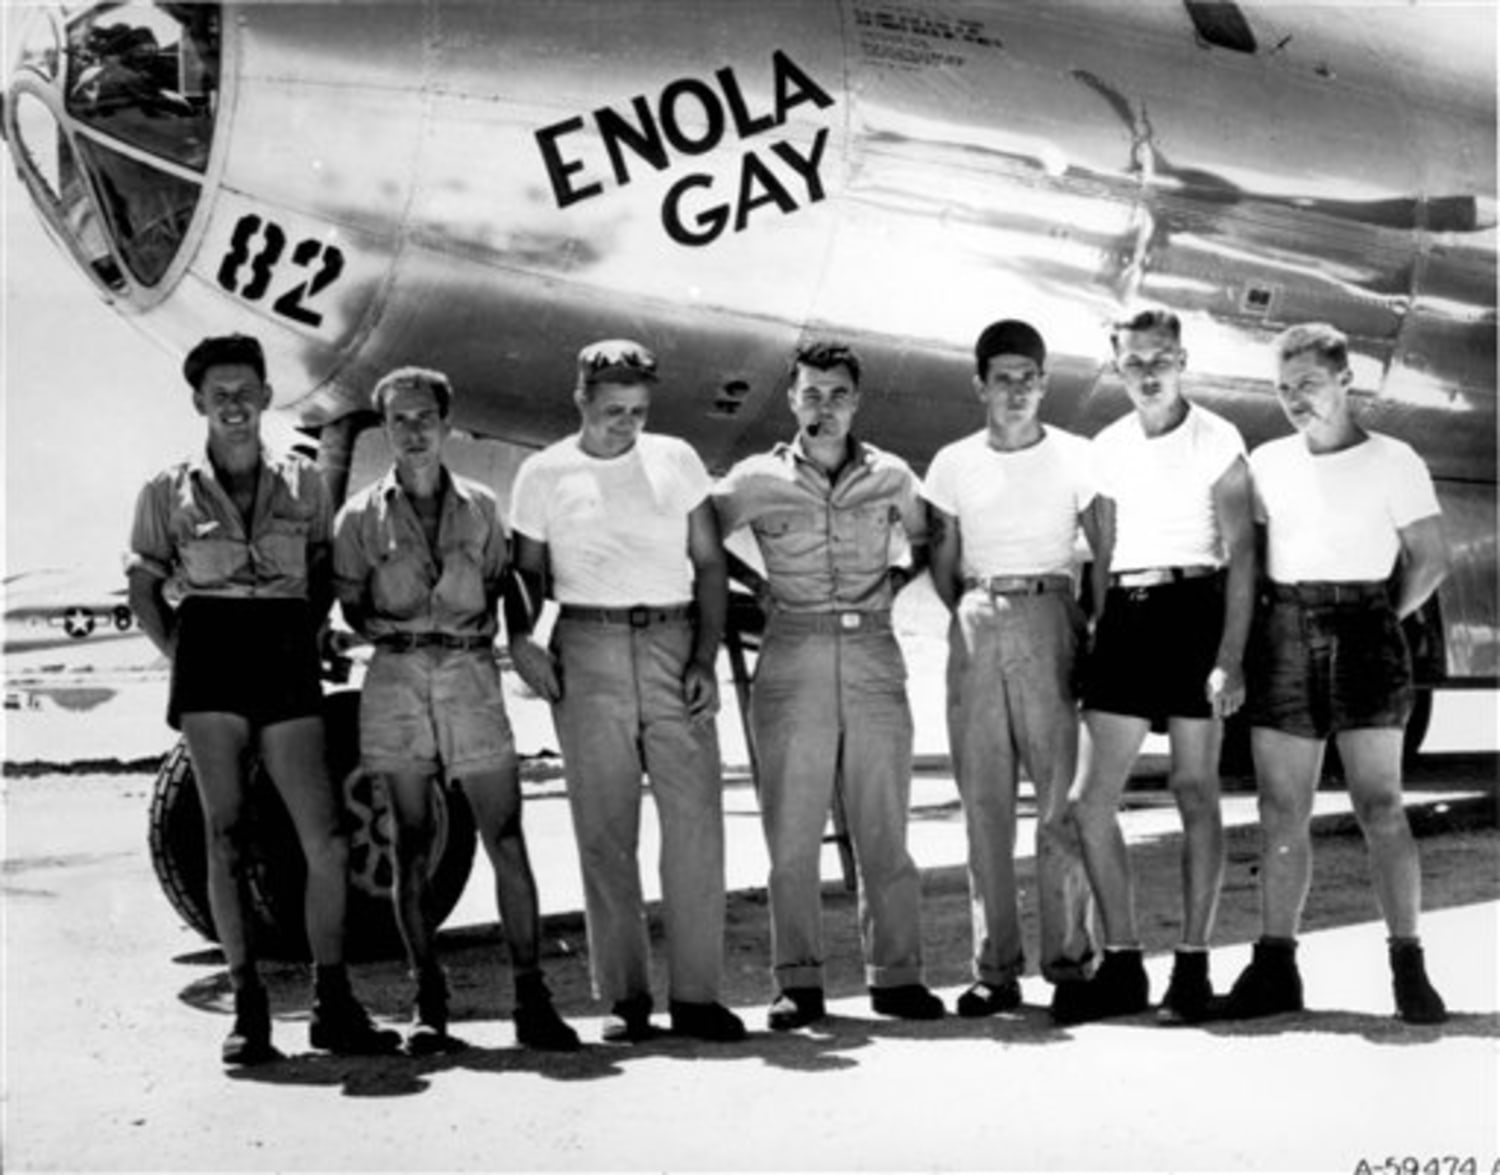 imagine a man pilot of enola gay